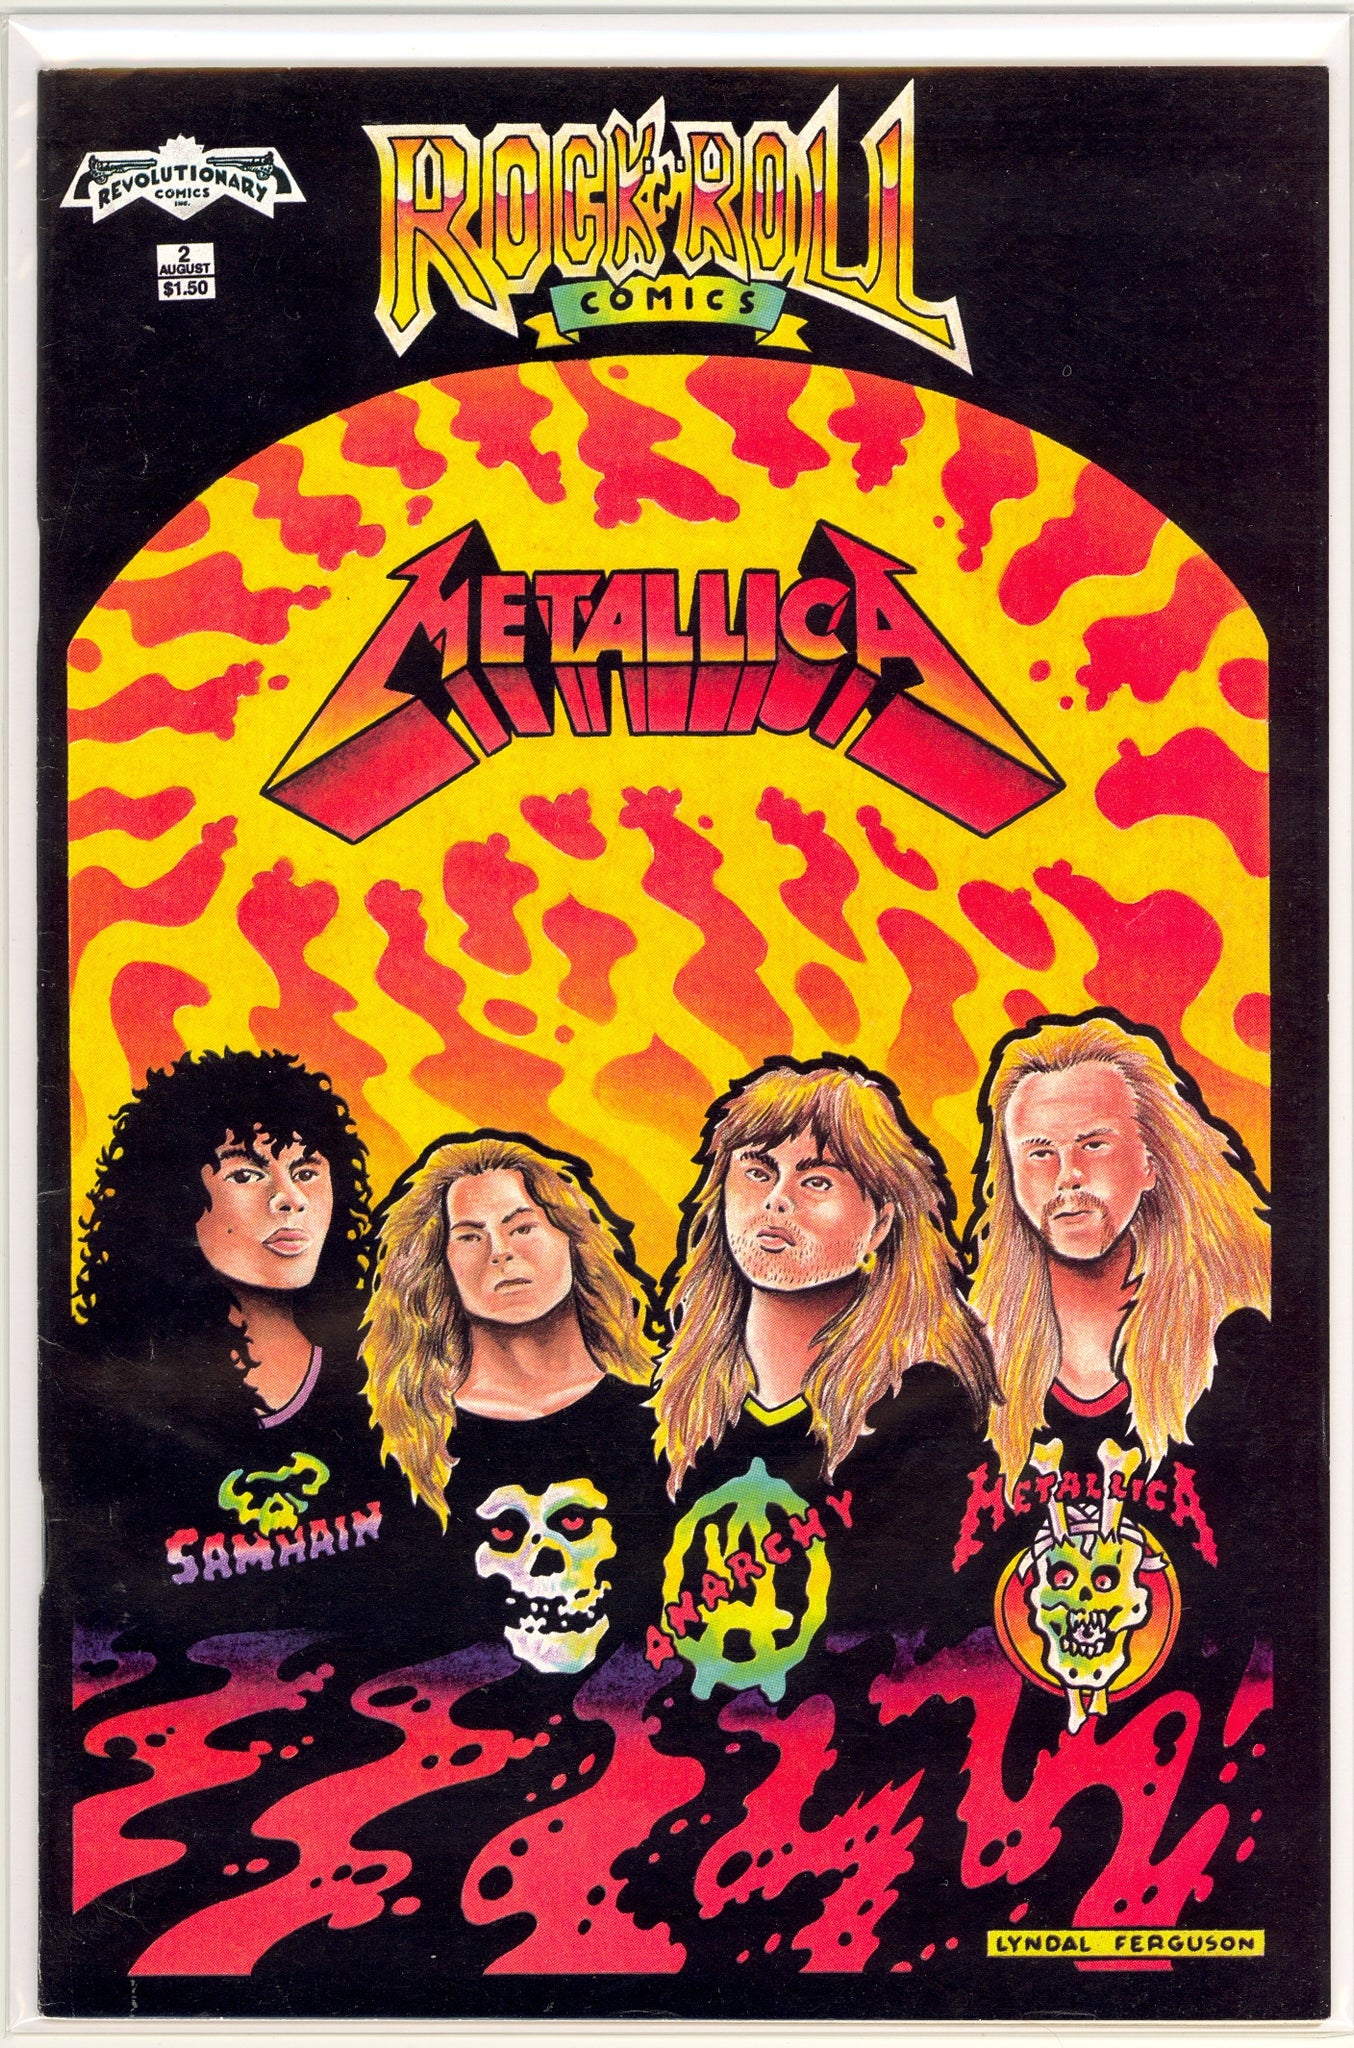 Rock-N-Roll Comics #2 (1989) Metallica